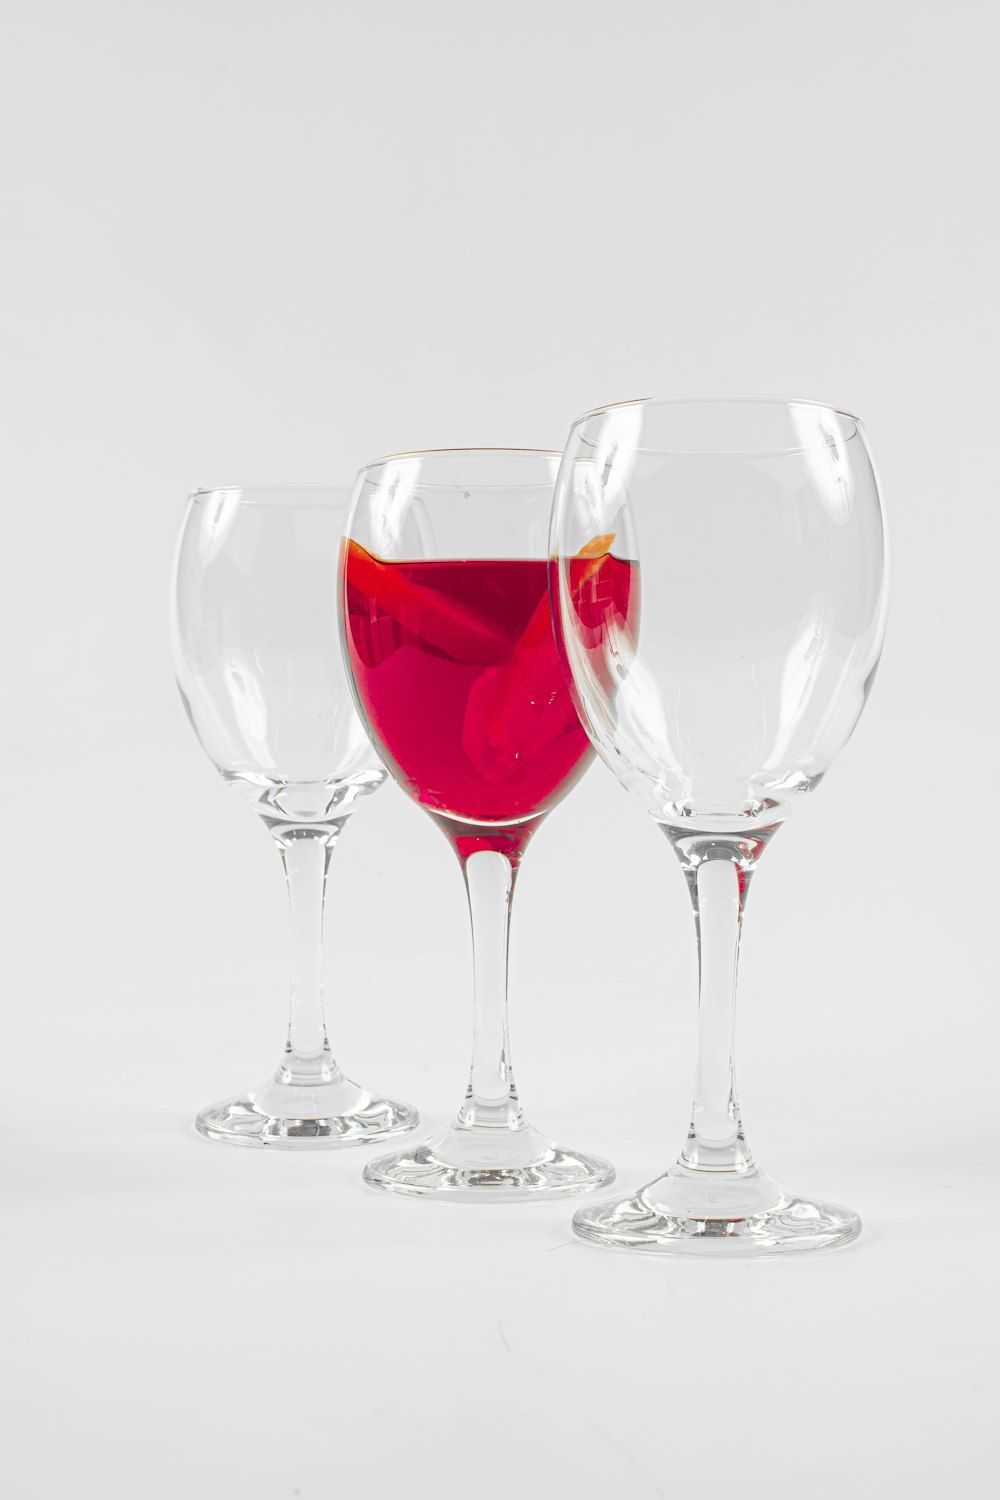 three clear glass wine glasses